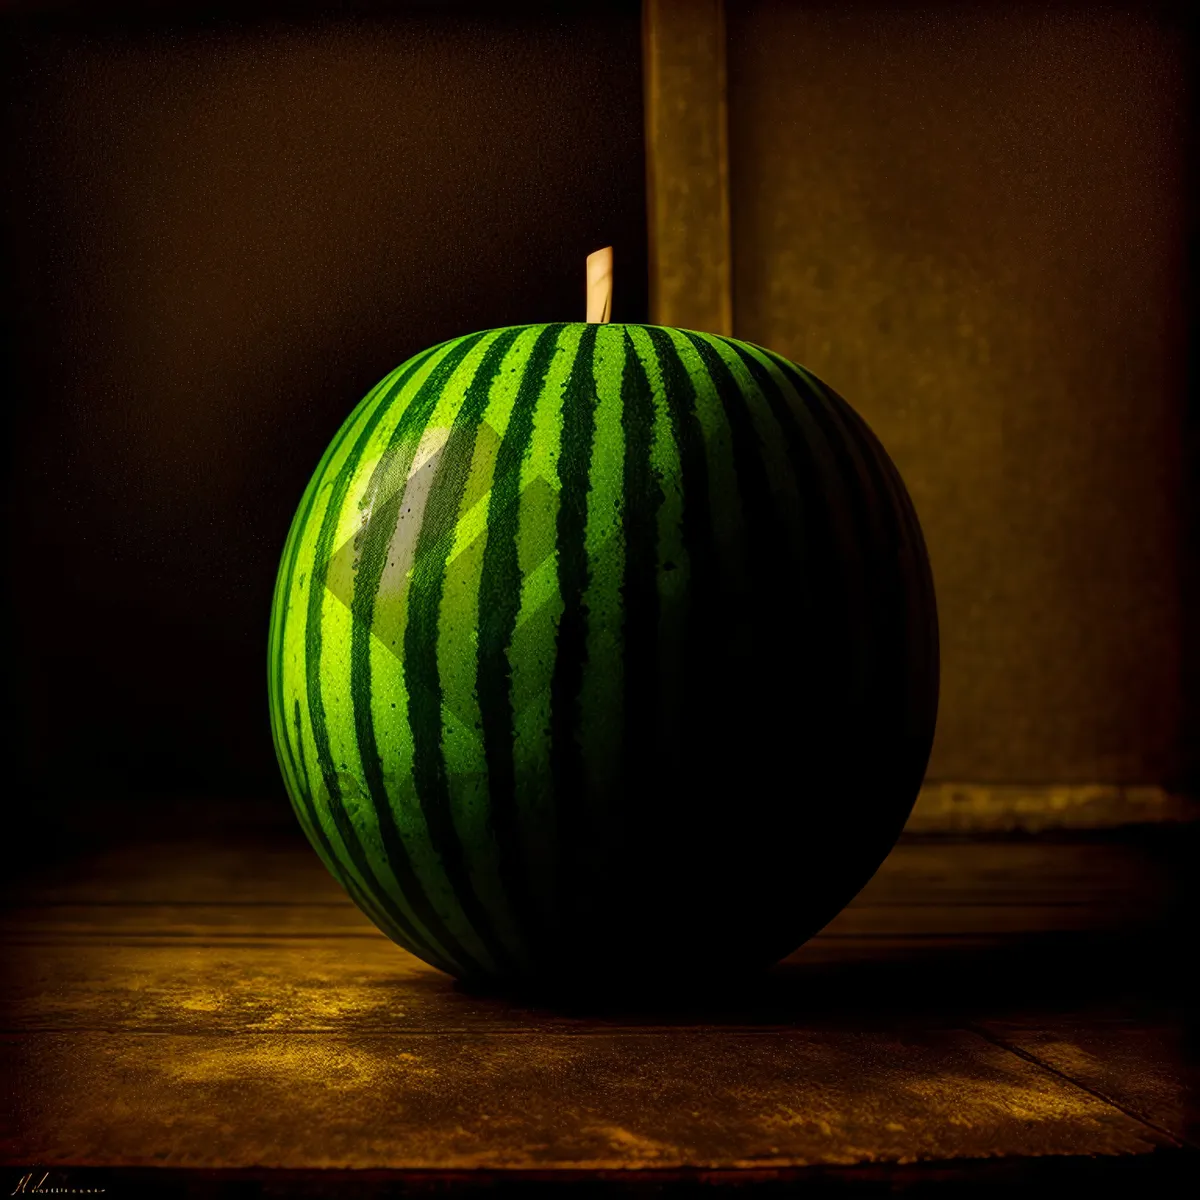 Picture of Autumn Harvest: Vibrant Pumpkin and Watermelon Fruit